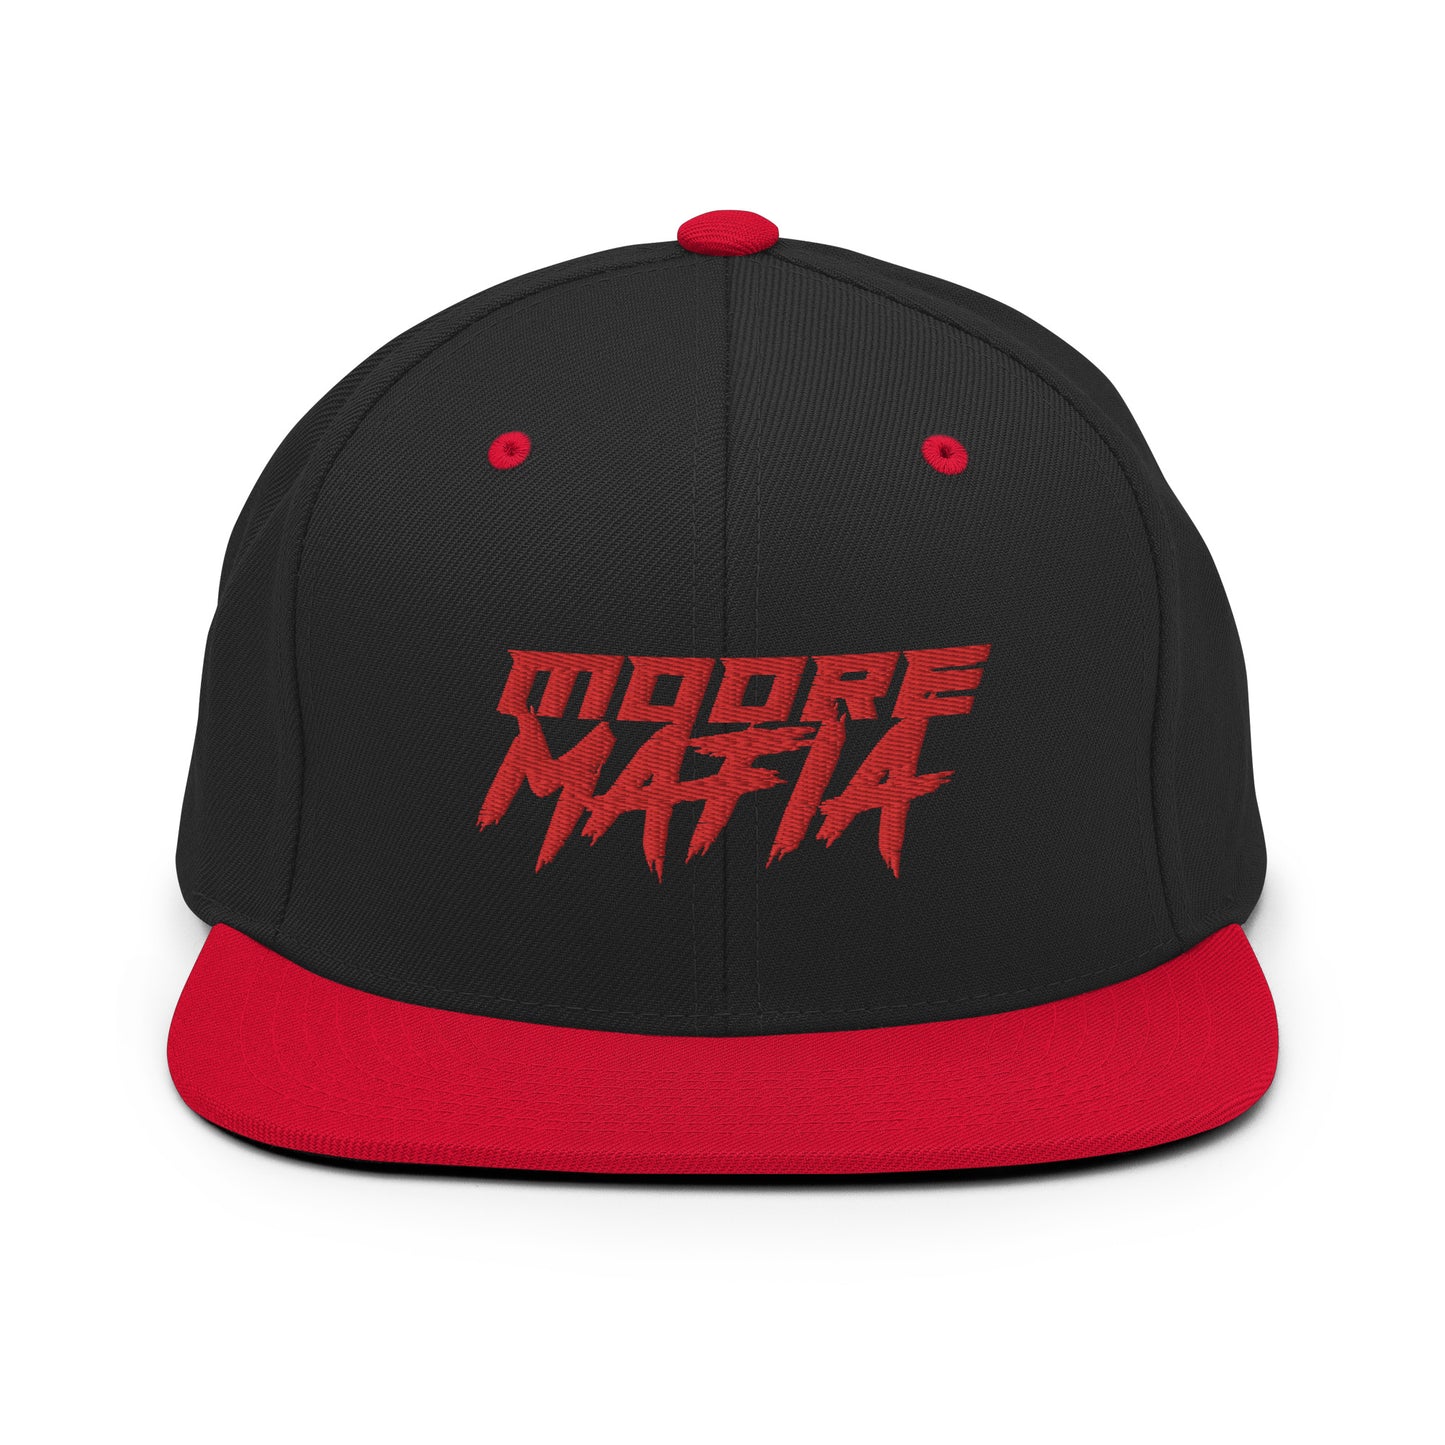 Moore Mafia Red Snapback Hat